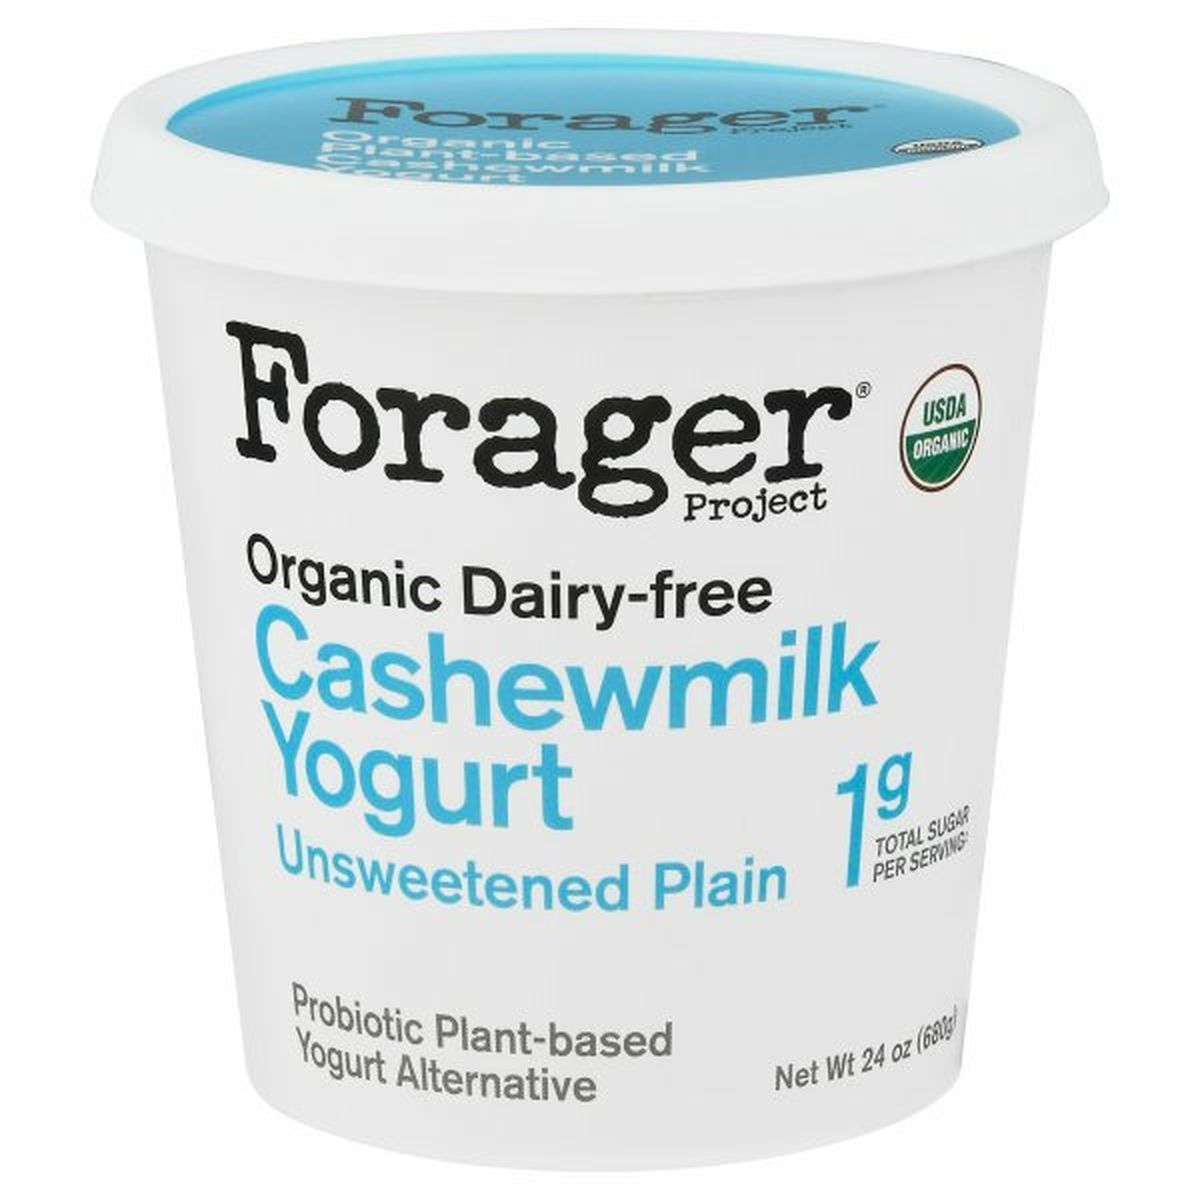 Calories in Forager Project Cashewmilk Yogurt, Organic, Dairy-Free, Unsweetened Plain